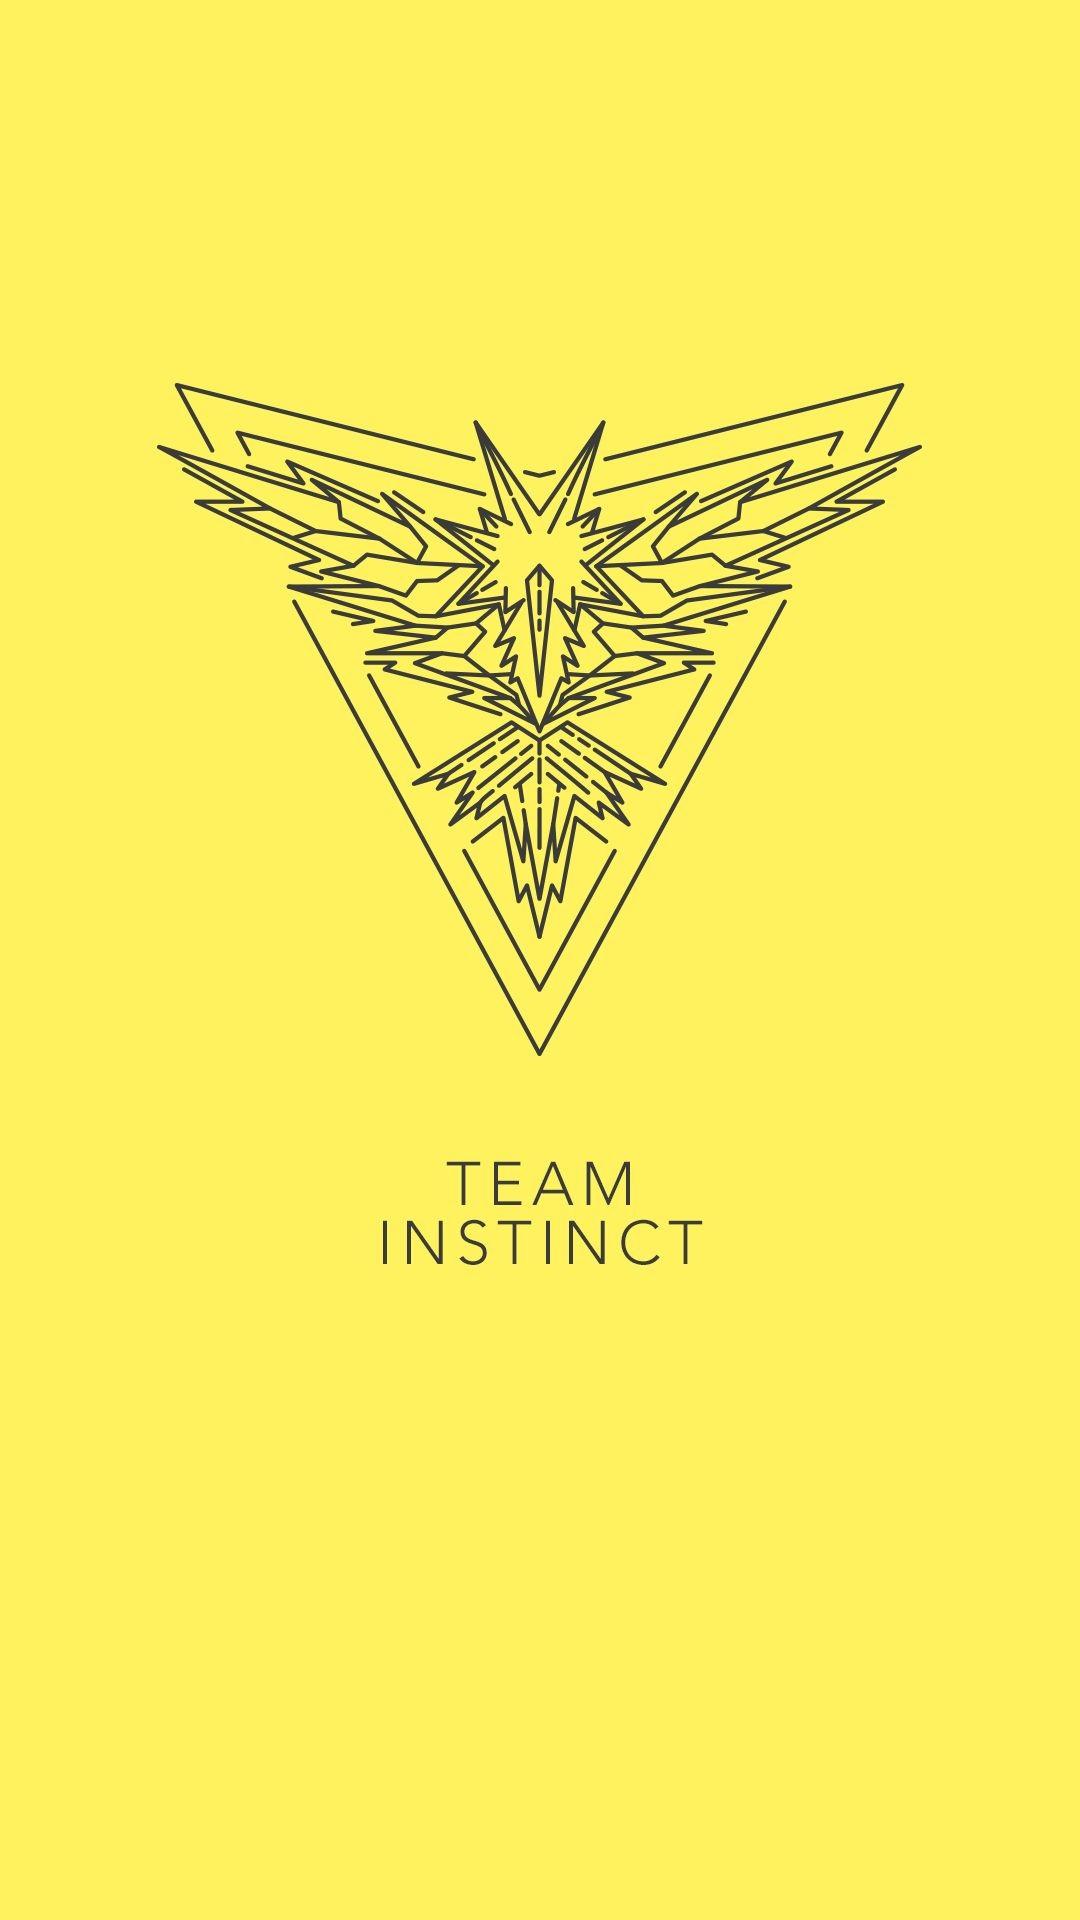 Team Instinct Wallpaper background picture